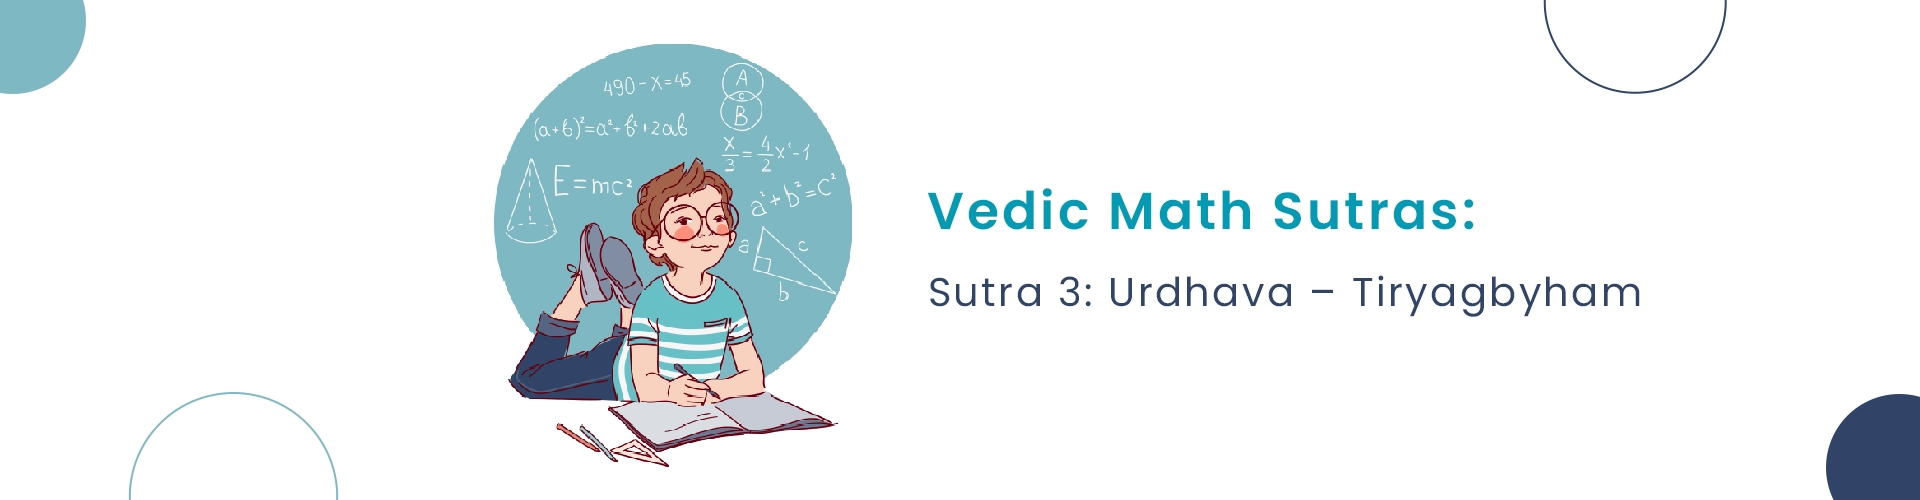 Vedic Math Sutra 3: Urdhava Tiryagbyham